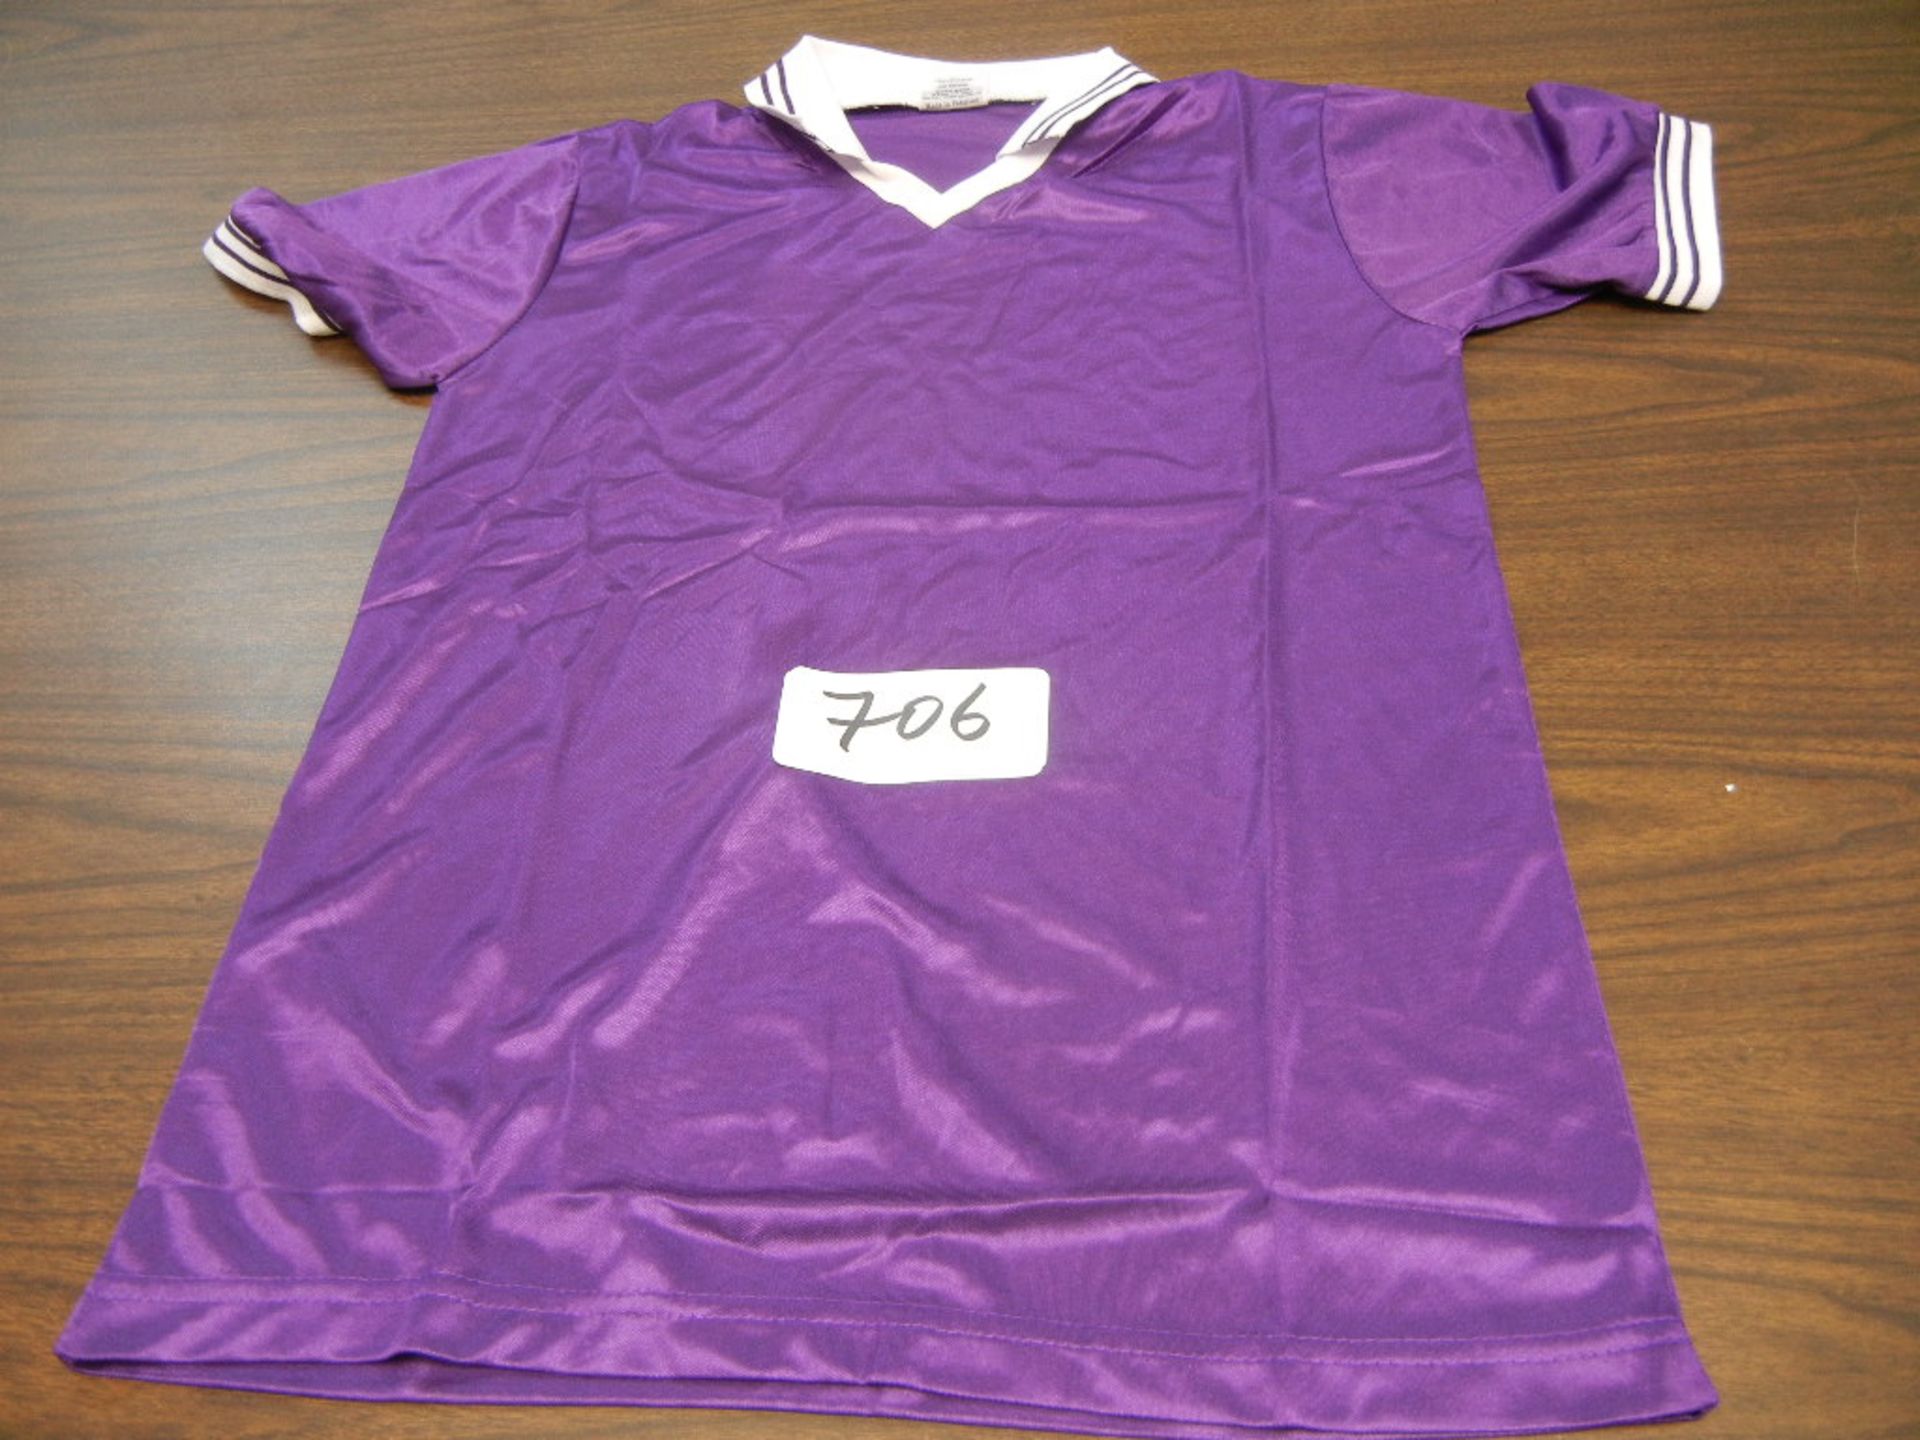 Youth Soccer Jersey 100% Polyester Hi-Sheen V-Neck, 1/4 Sleeves, Knit Collar VKM# Y696